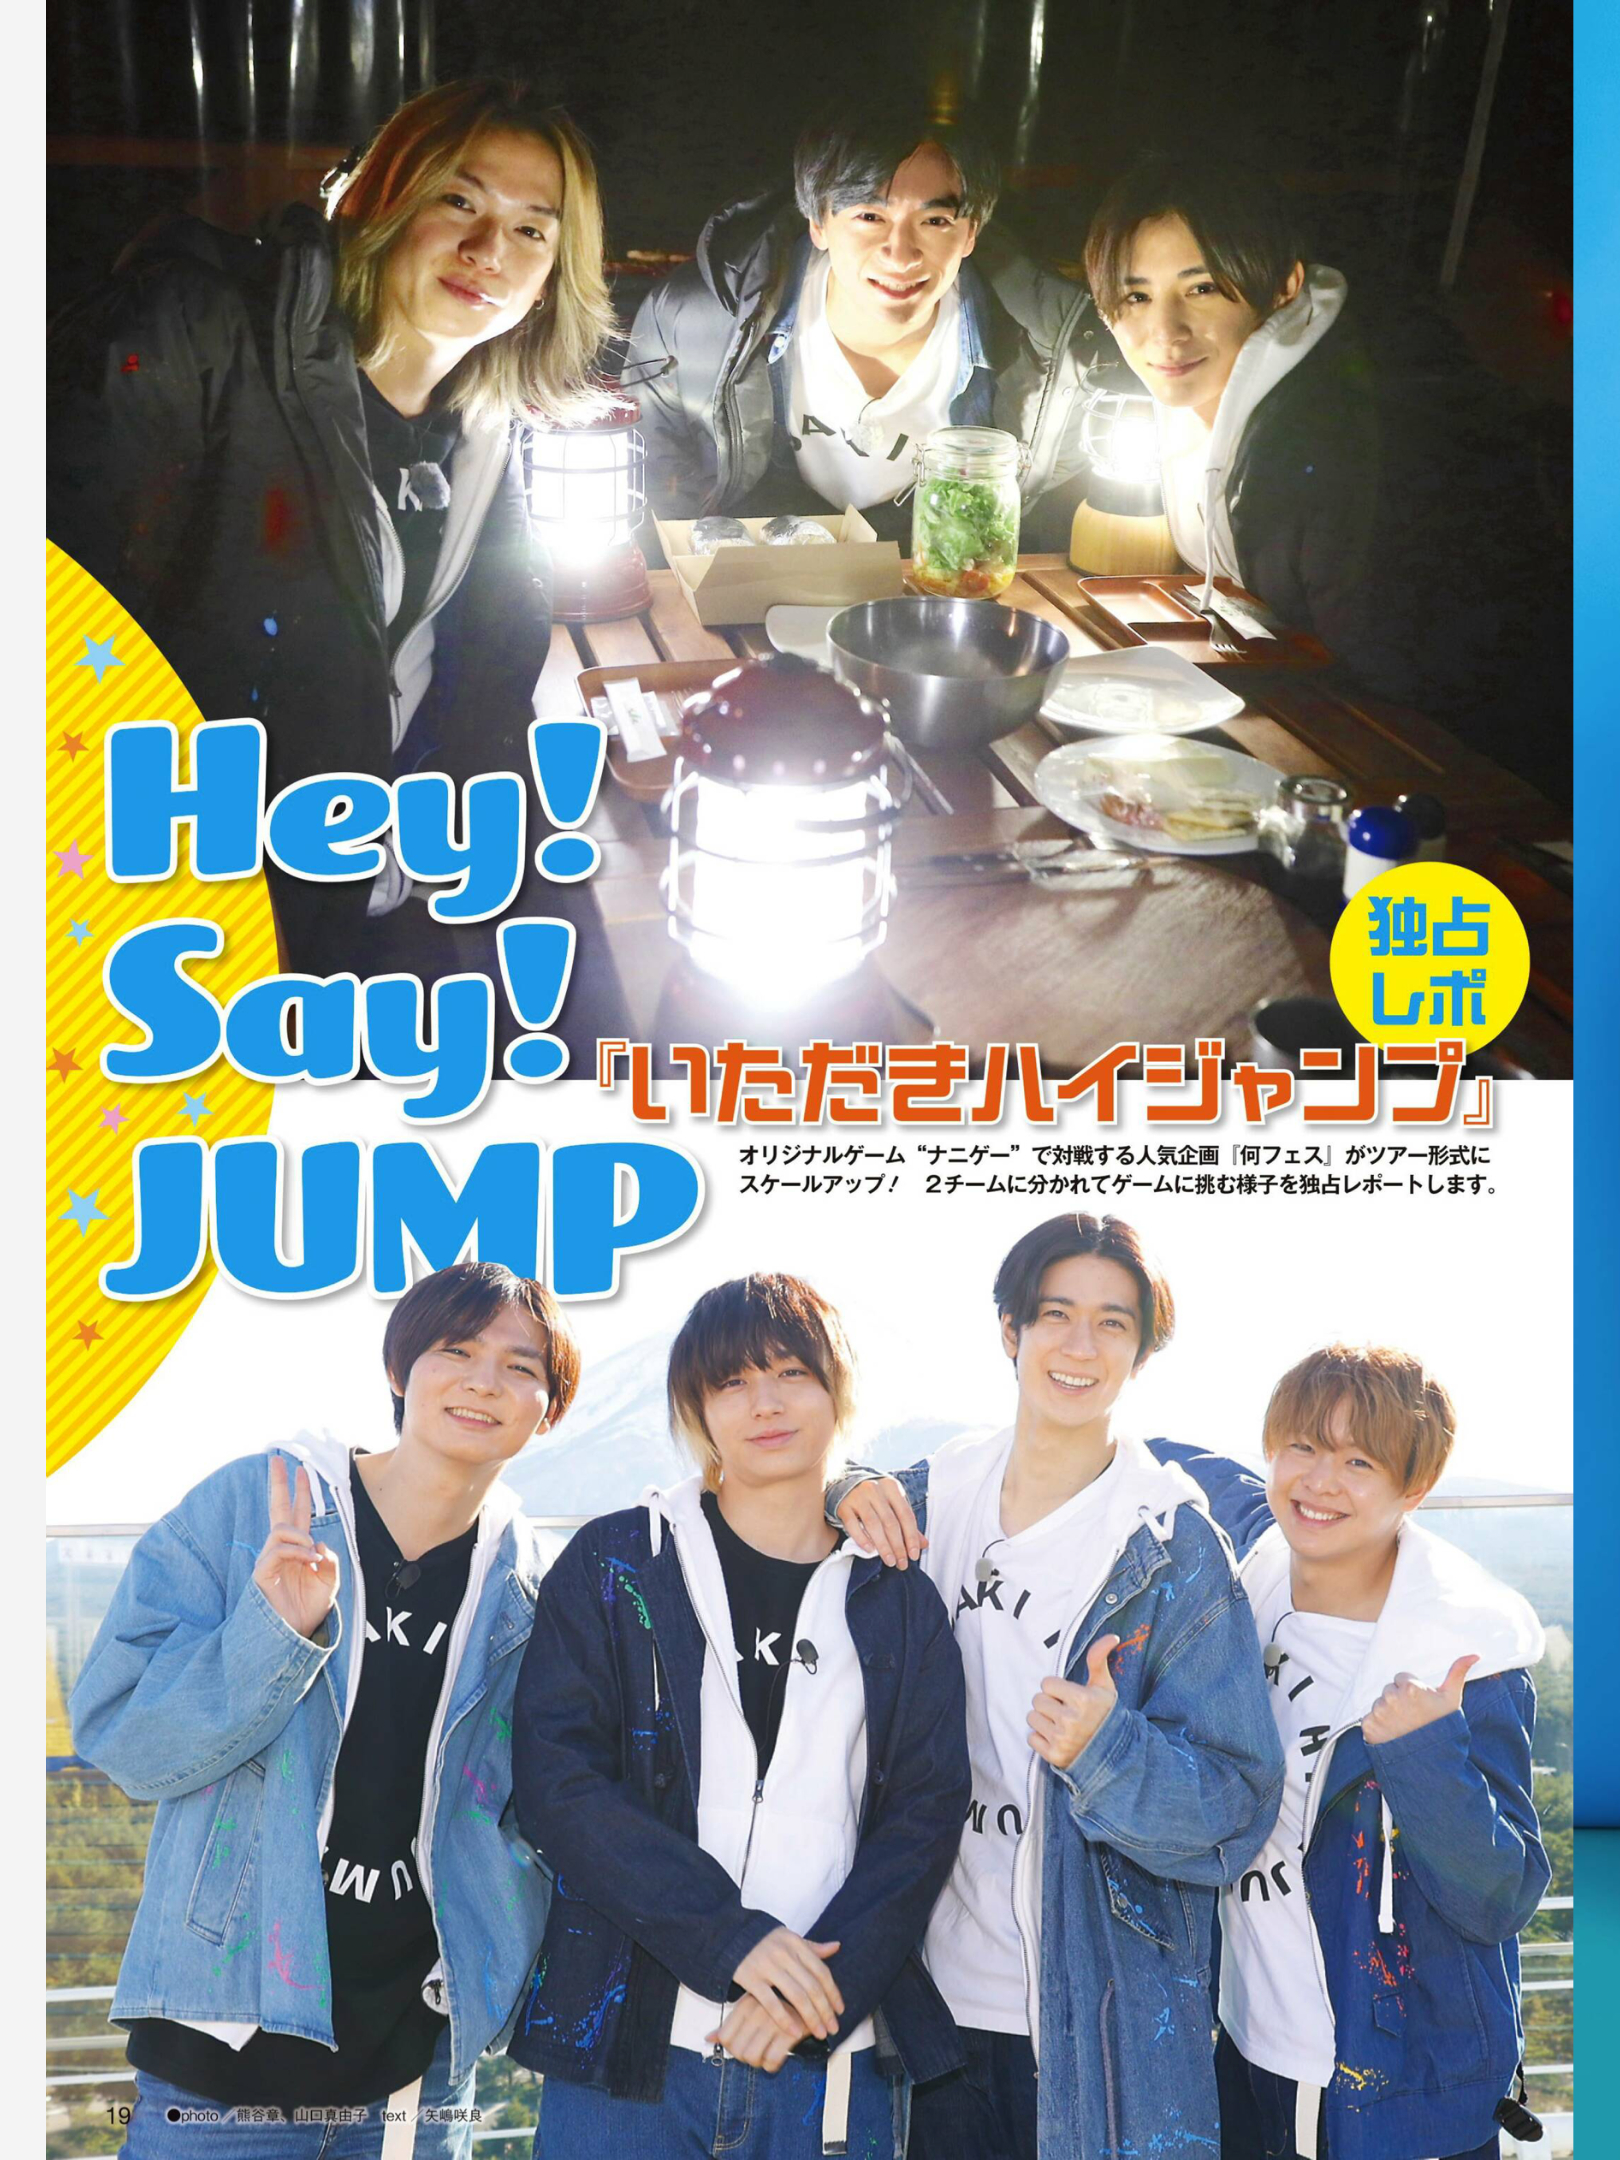 Hey!Say!JUMP TV LIFE 2022年11月25日号 - itotii